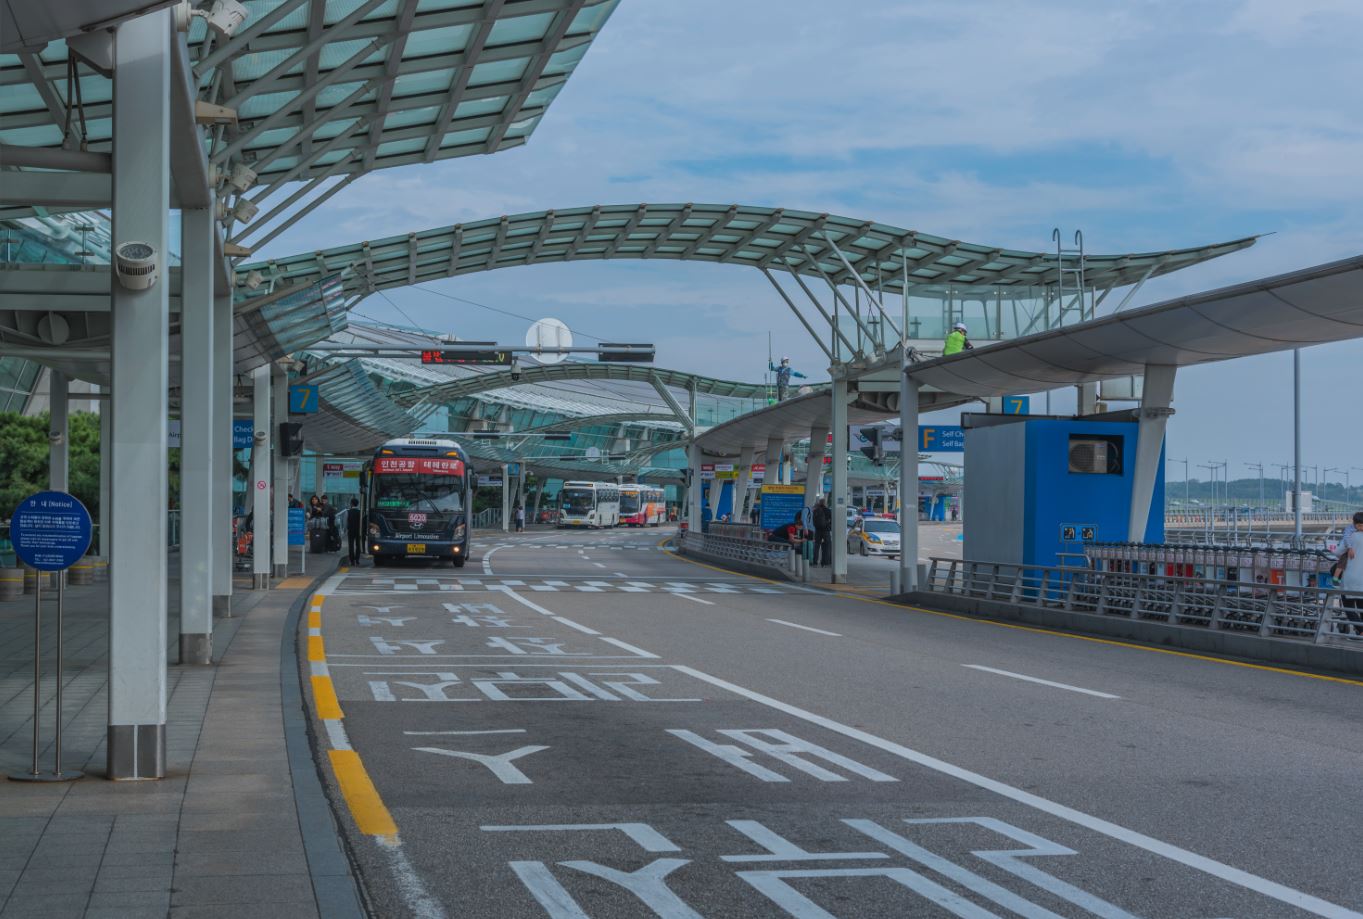 Incheon Airport Customer Reviews | SKYTRAX
